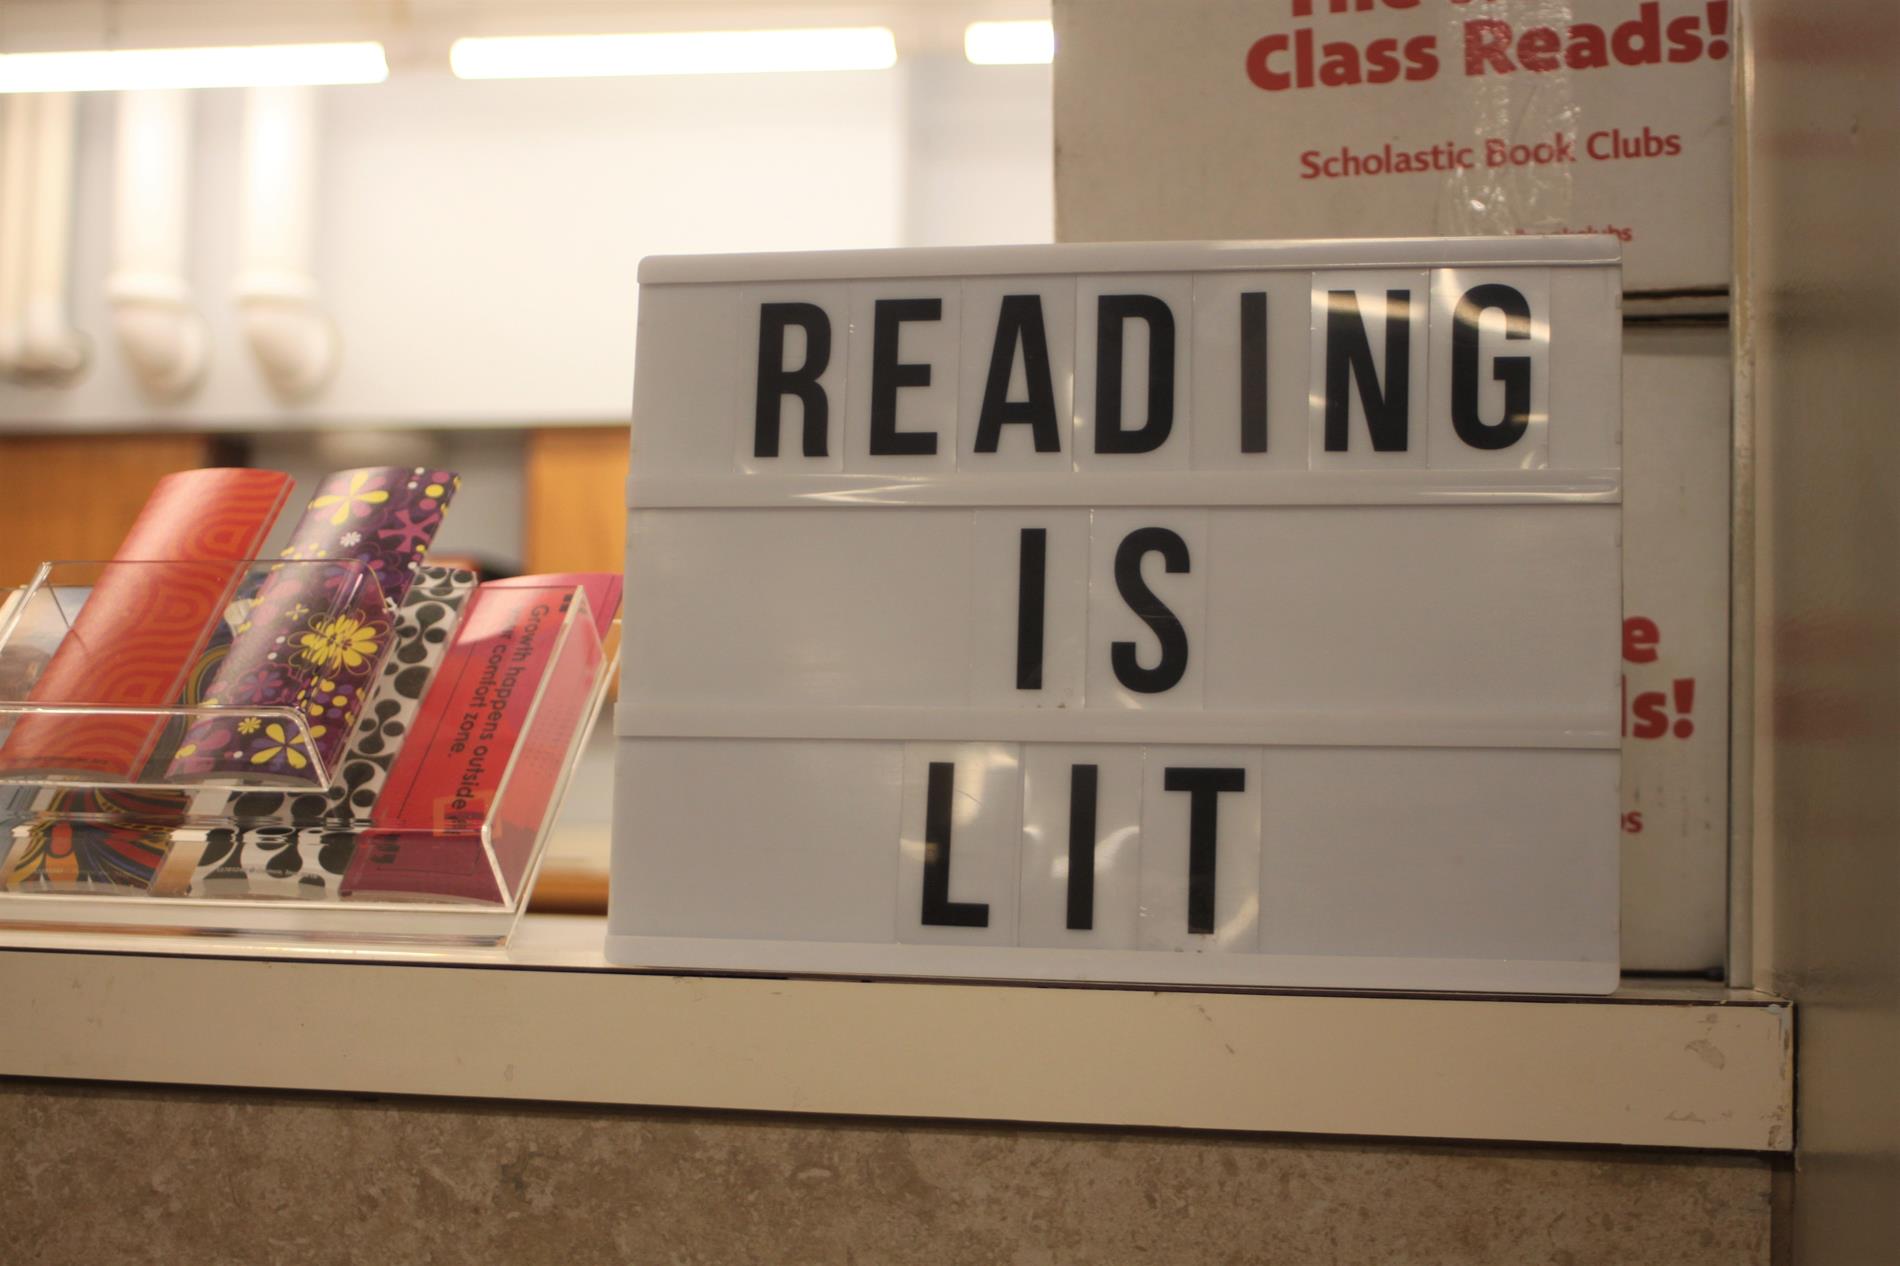 "Reading is Lit" 